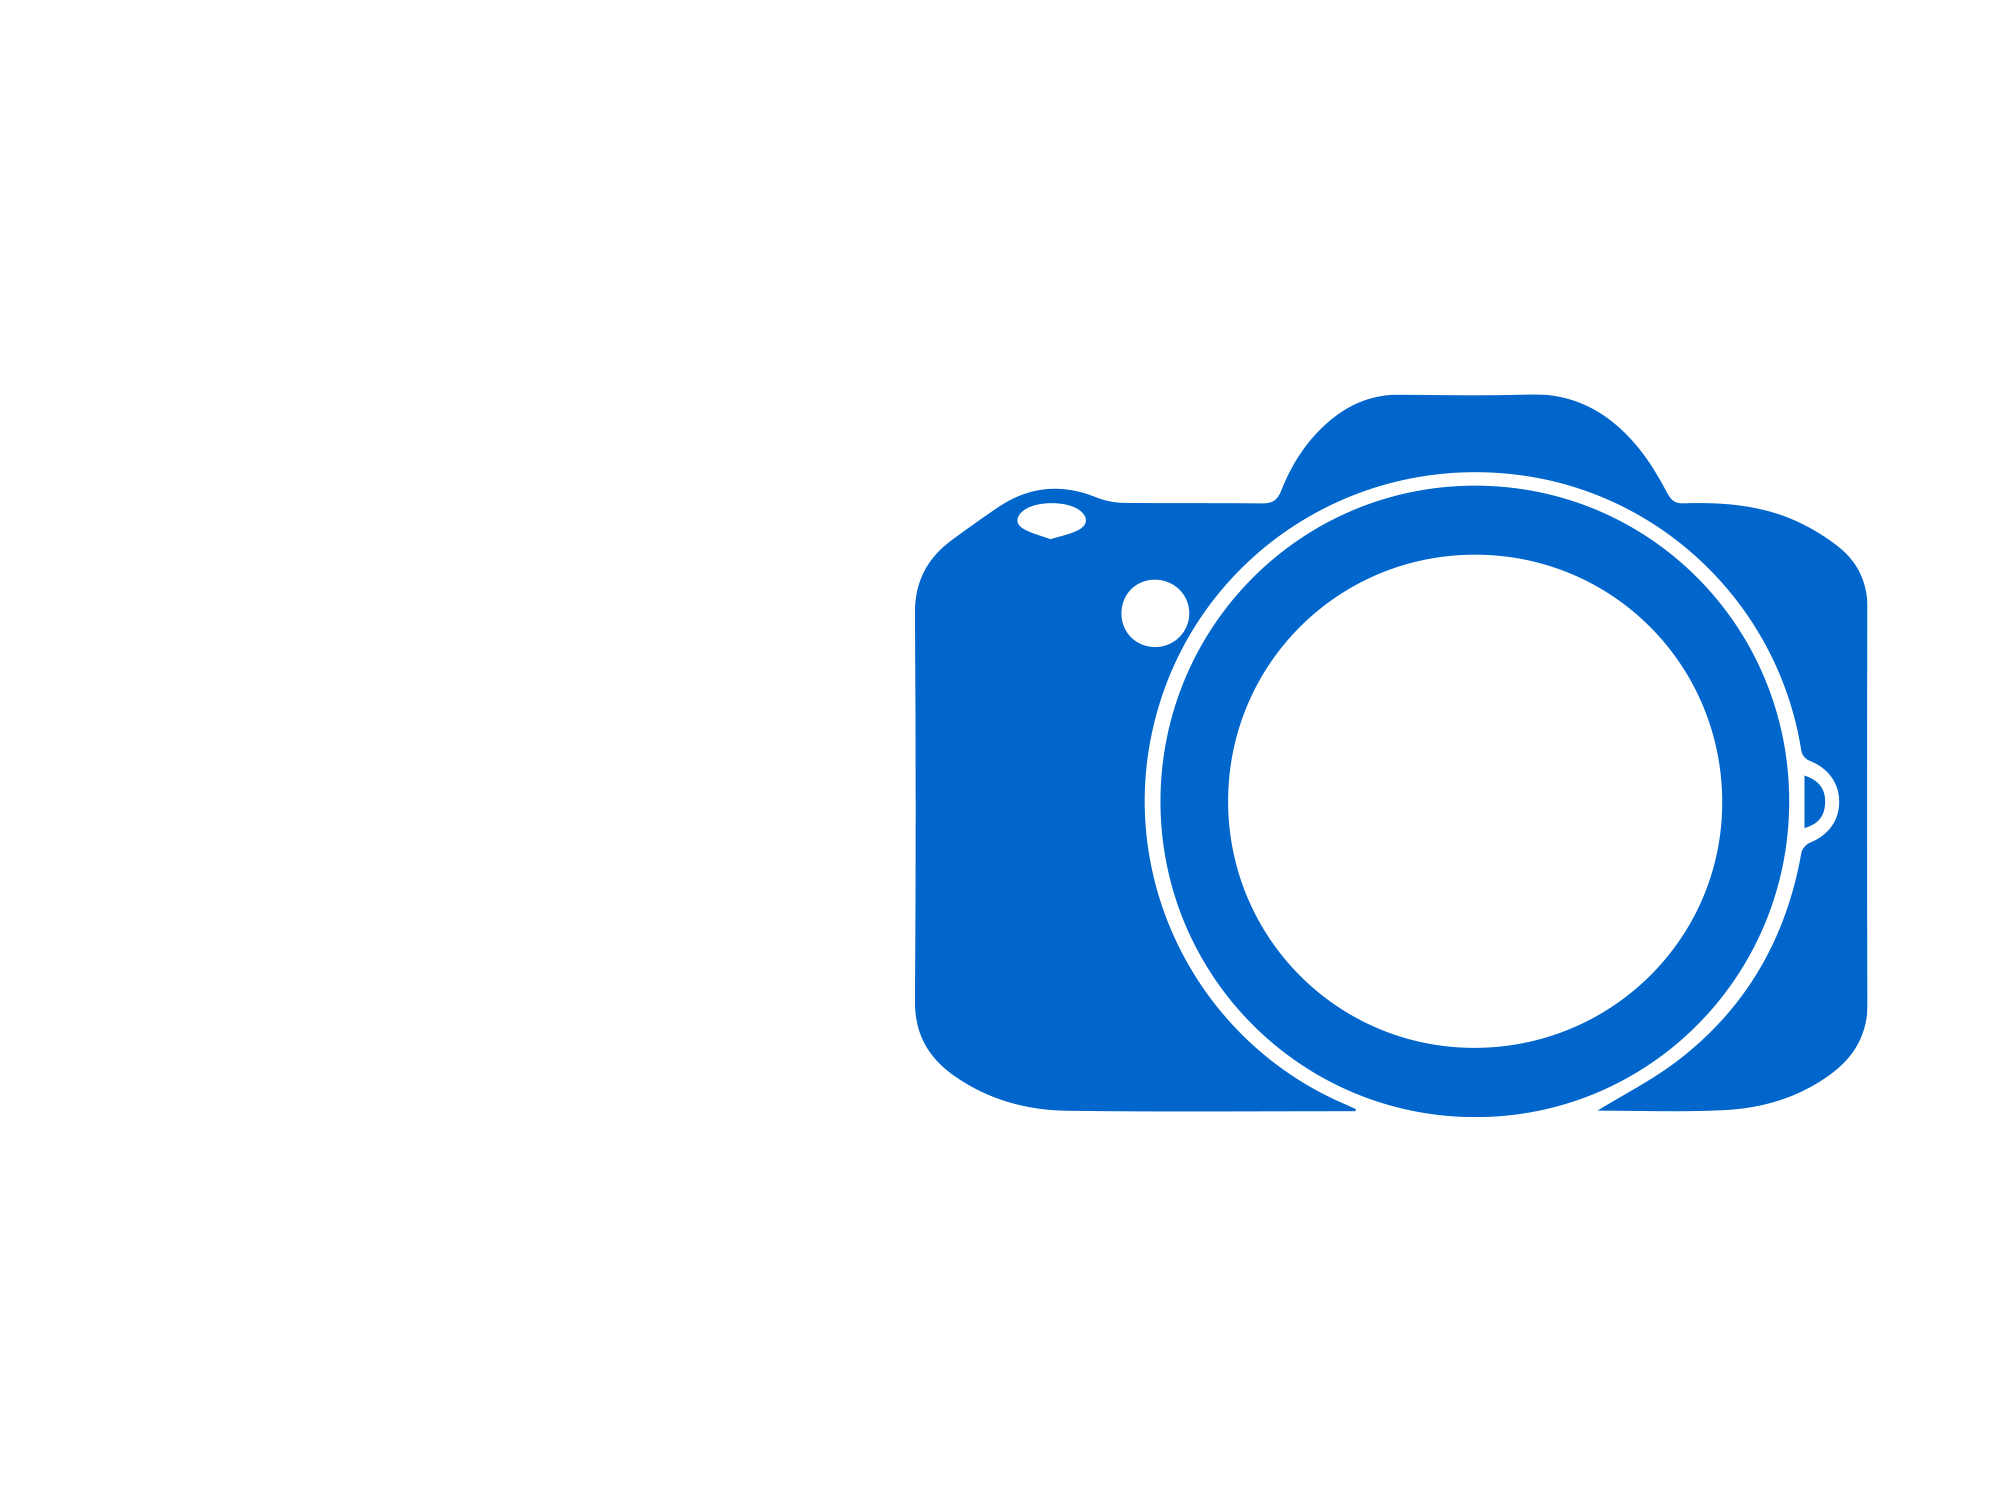 Daniel A. Swalec